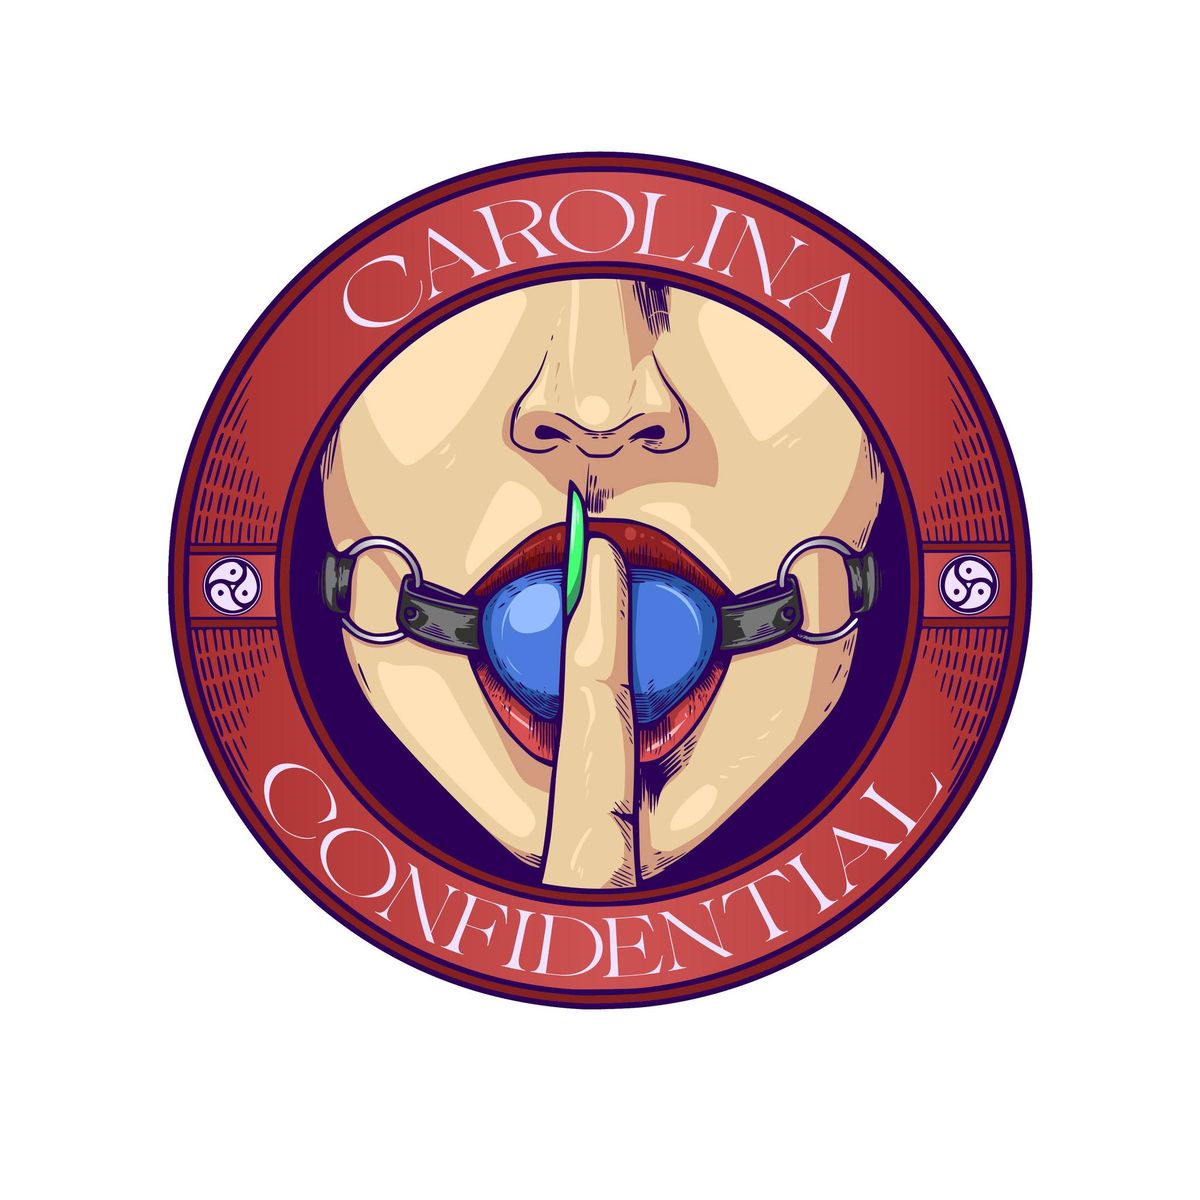 Carolina Confidential presents: SEANCE